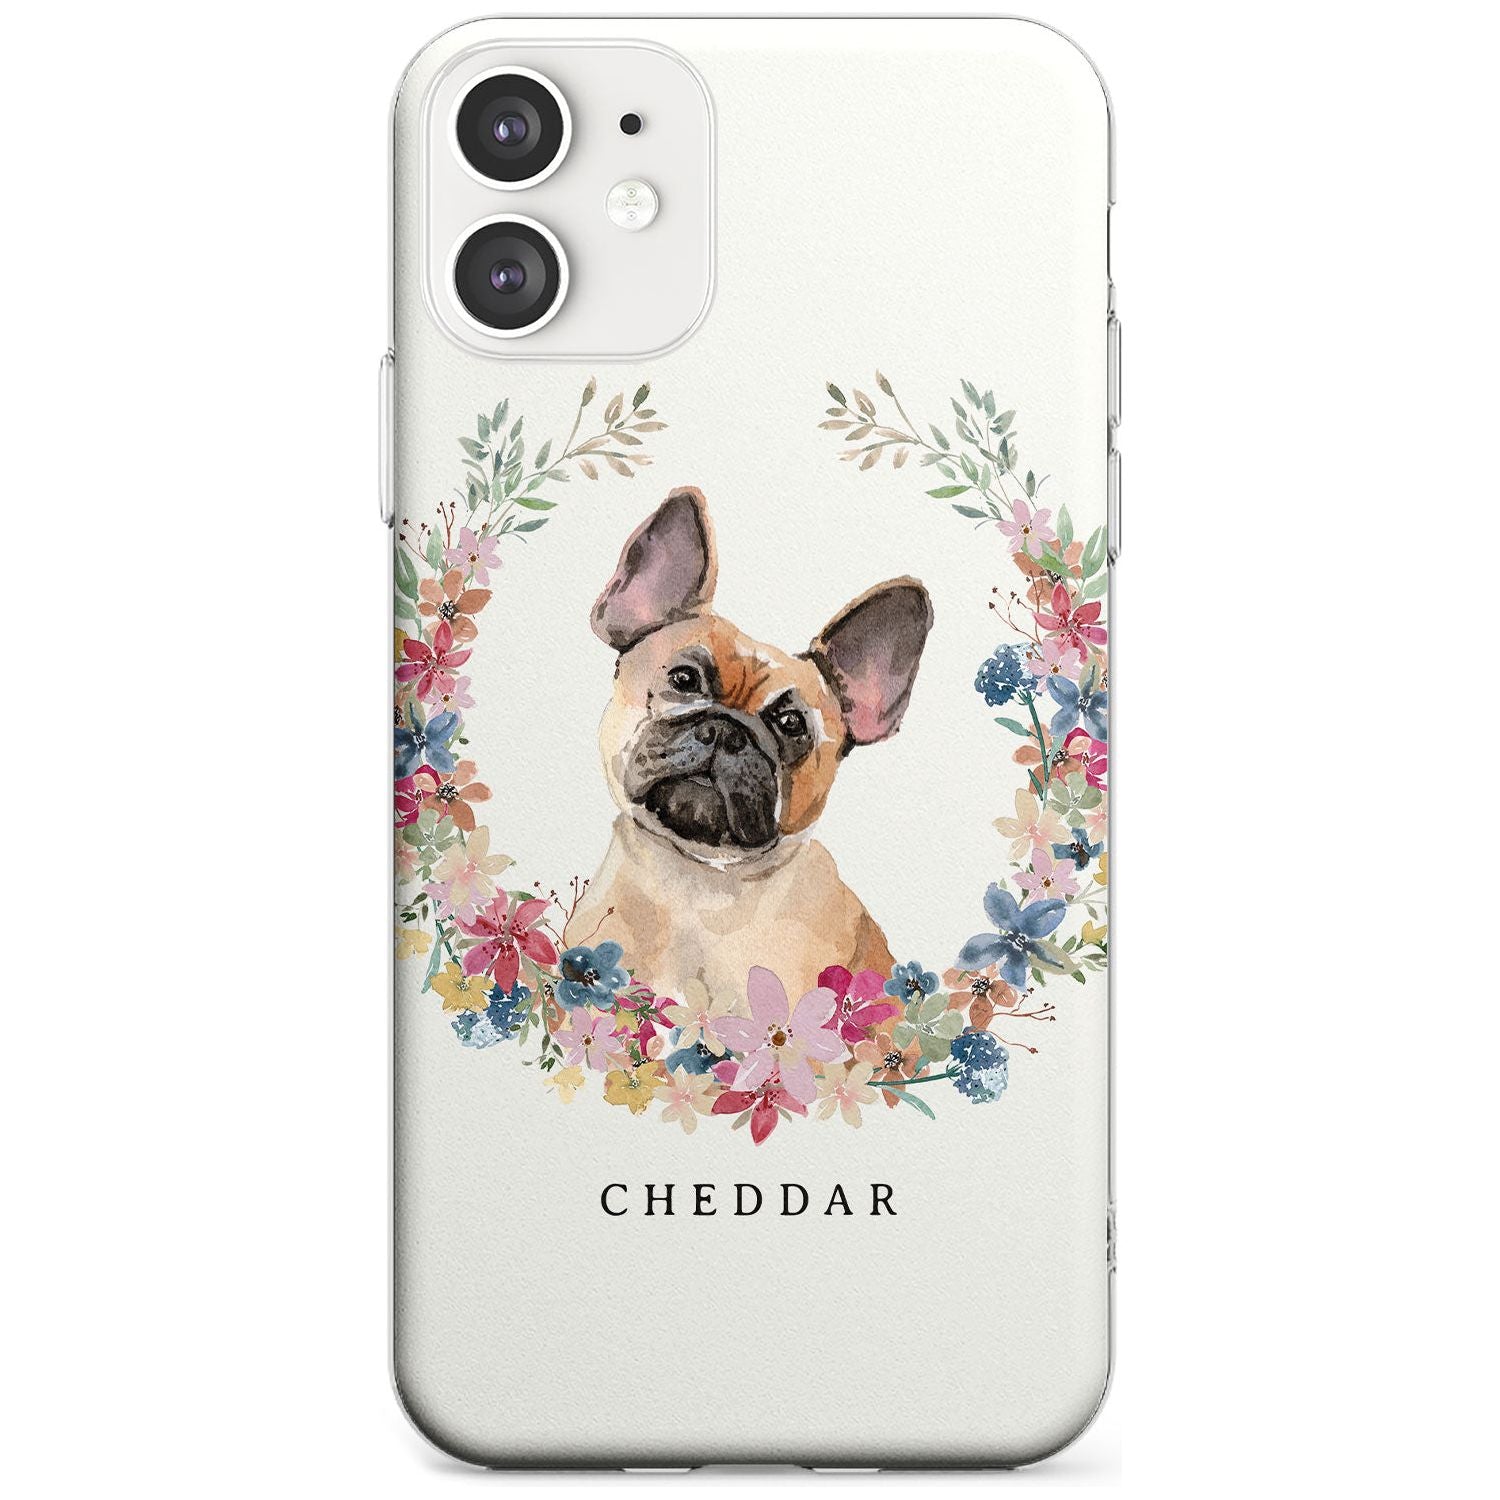 Tan French Bulldog Watercolour Dog Portrait Slim TPU Phone Case for iPhone 11